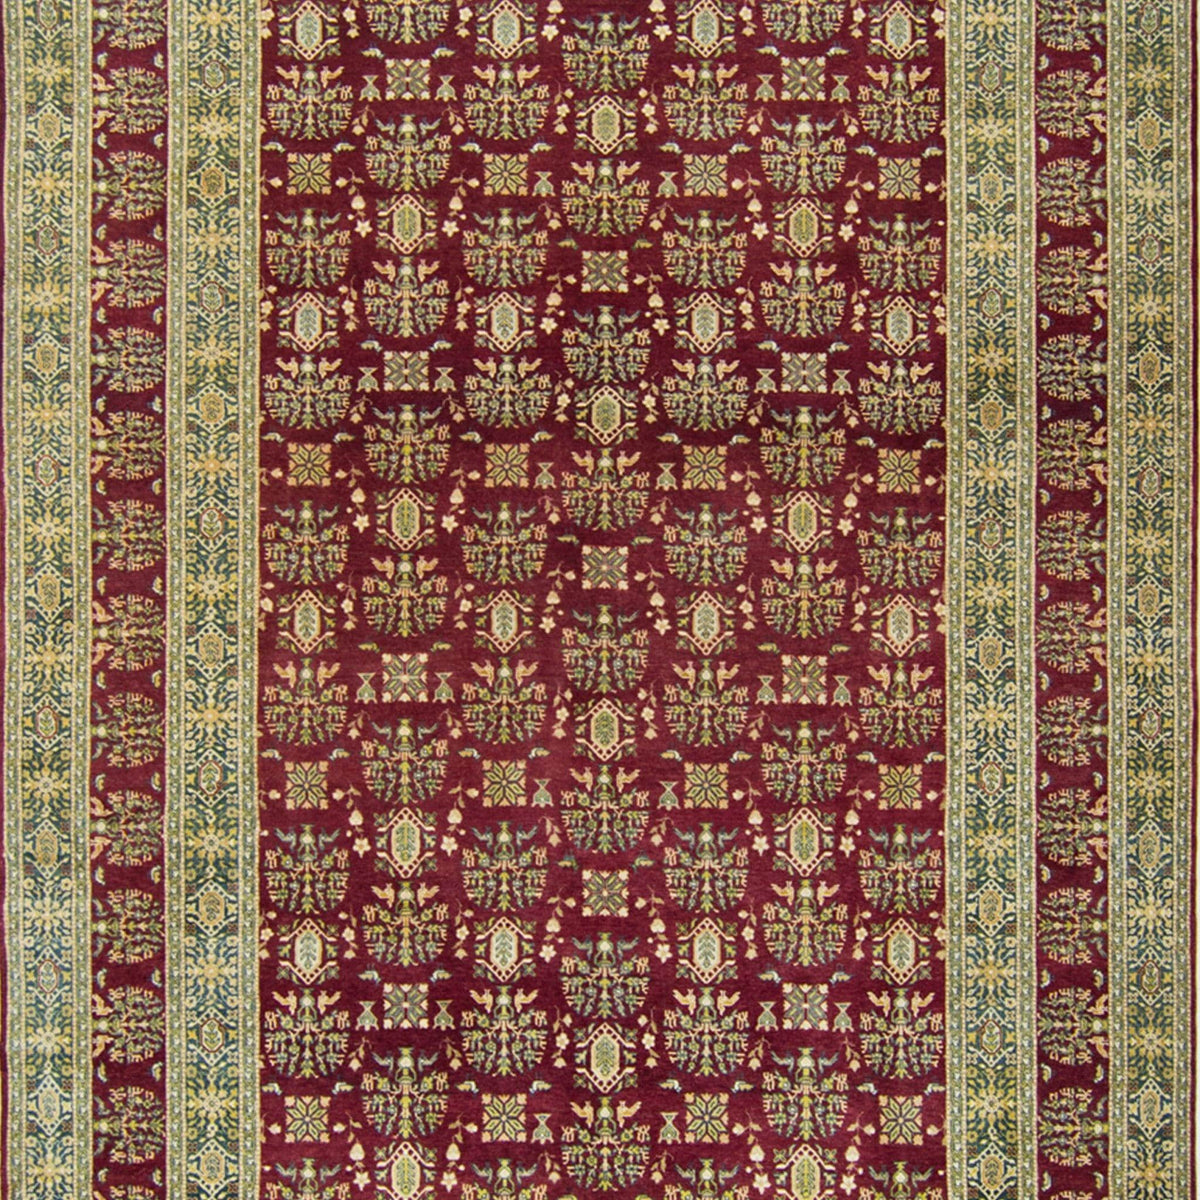 Fine Hand-knotted Wool and Silk Tabriz Rug 185cm x 282cm